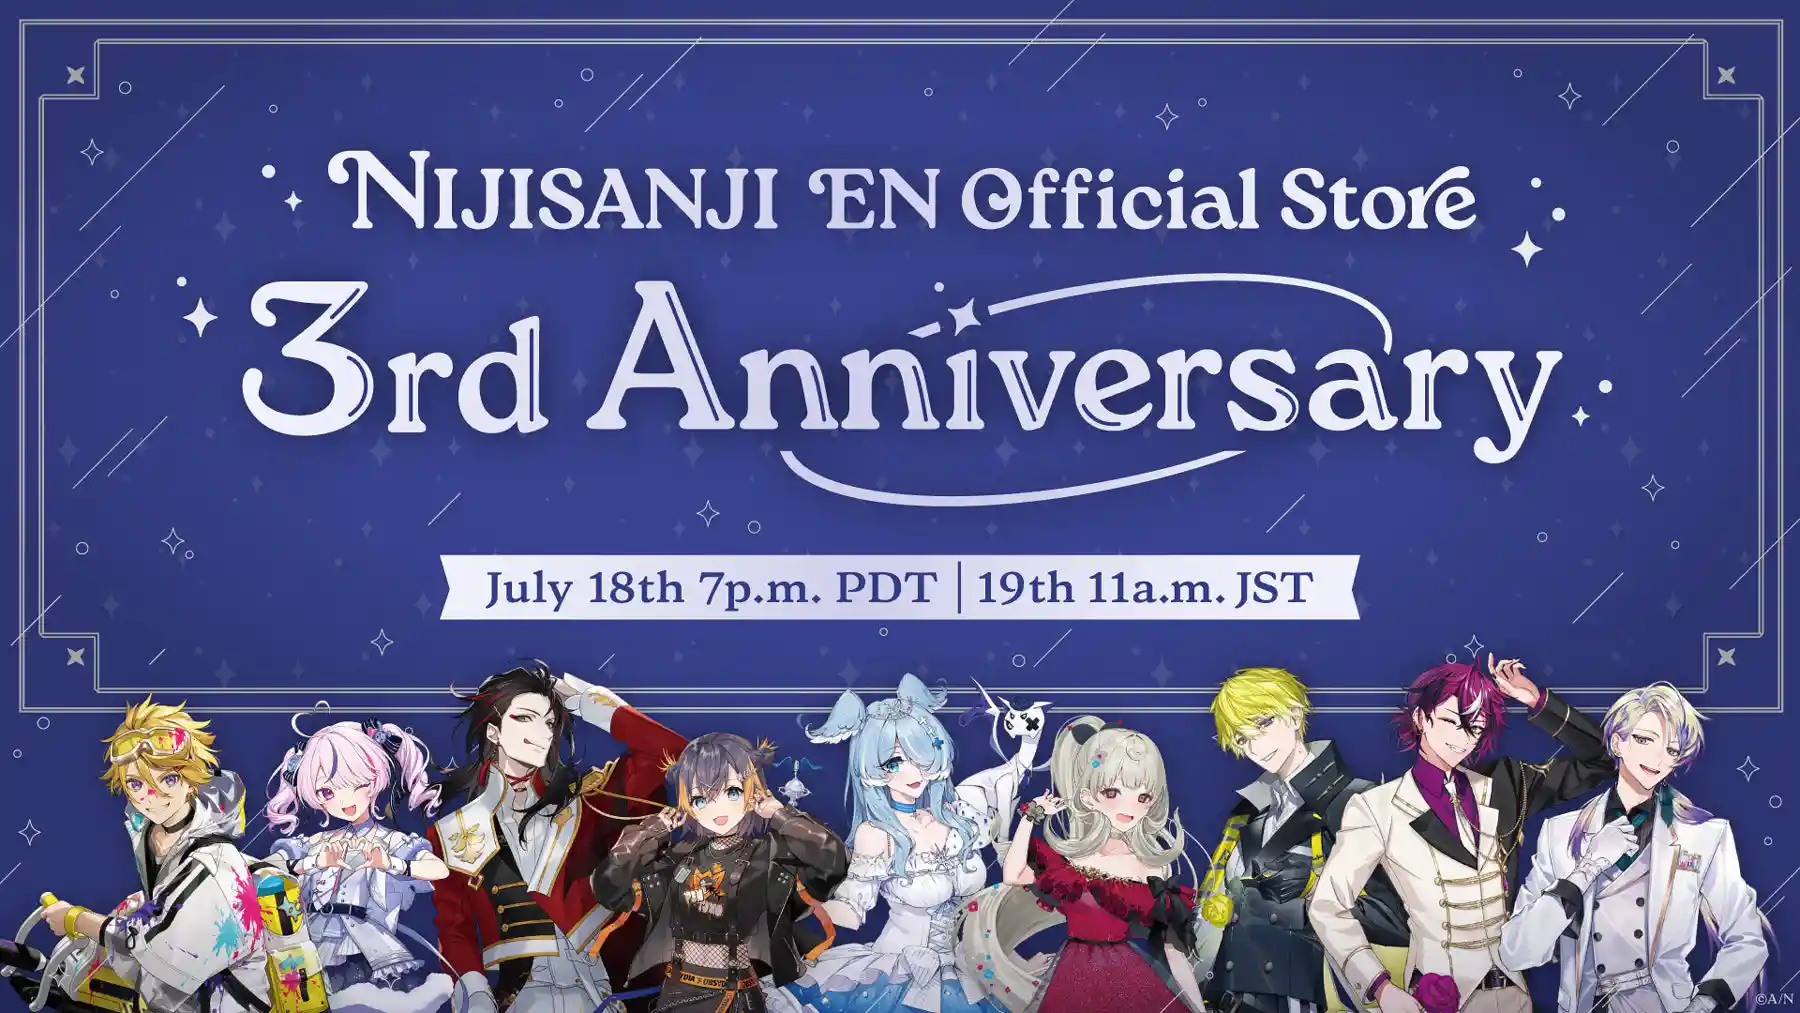 NIJISANJI EN Official Store 3rd Anniversary Campaign